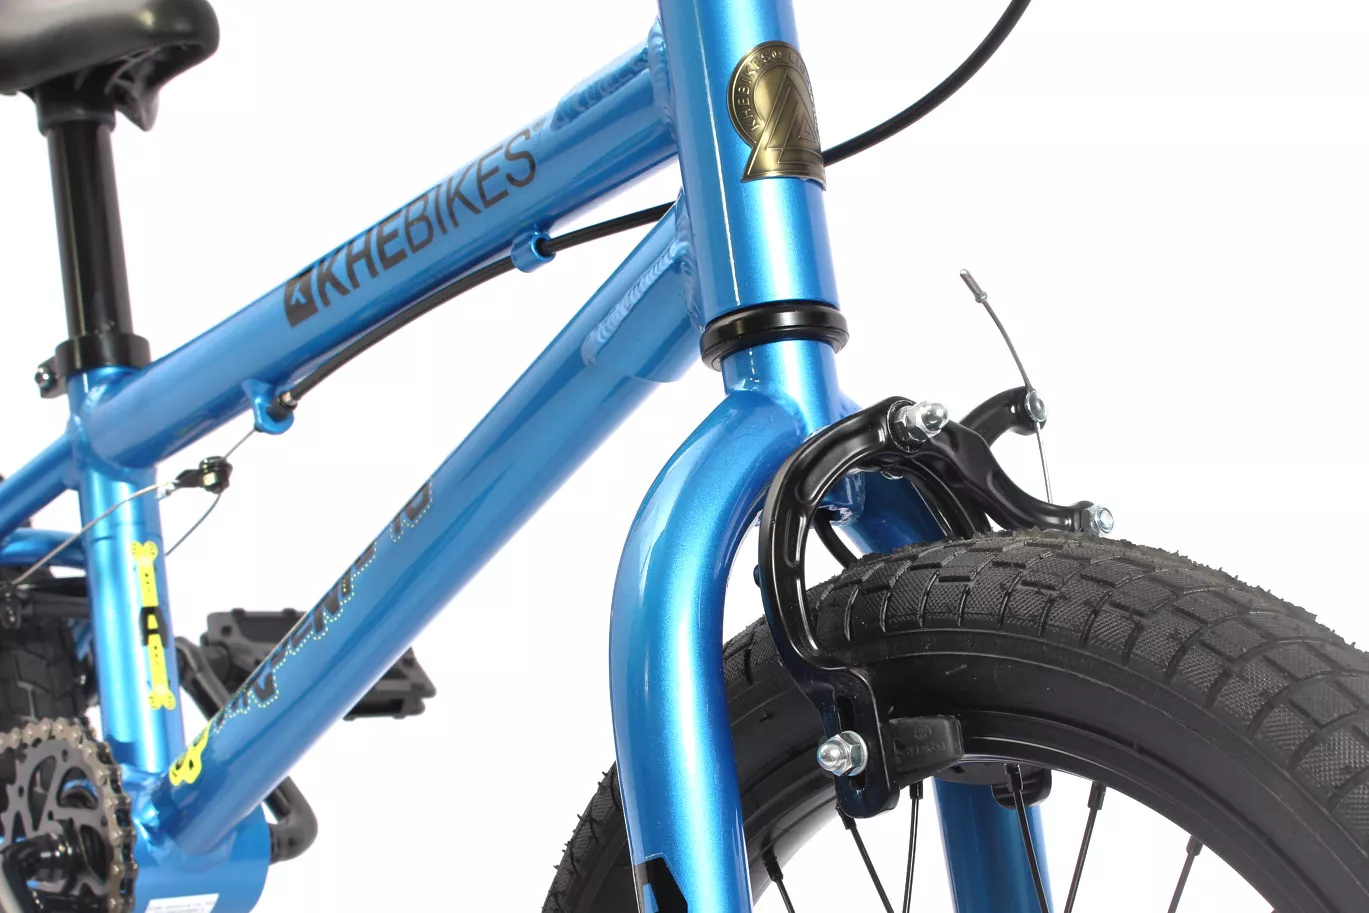 BMX bike aluminum KHE ARSENIC LL 16 inch 17.6lbs